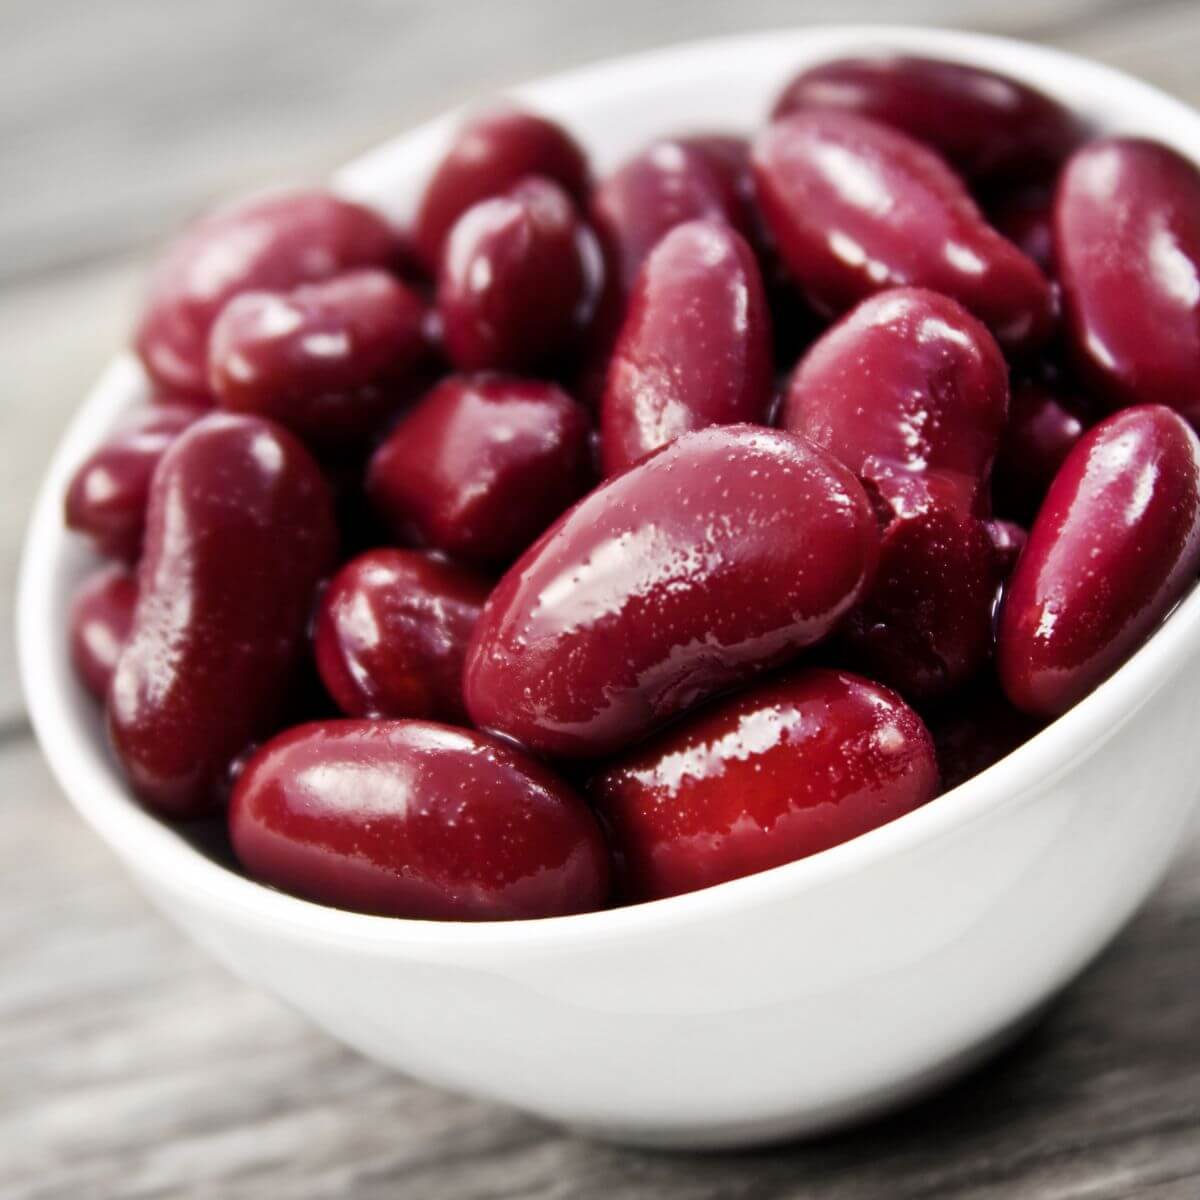 Kidney beans health benefits